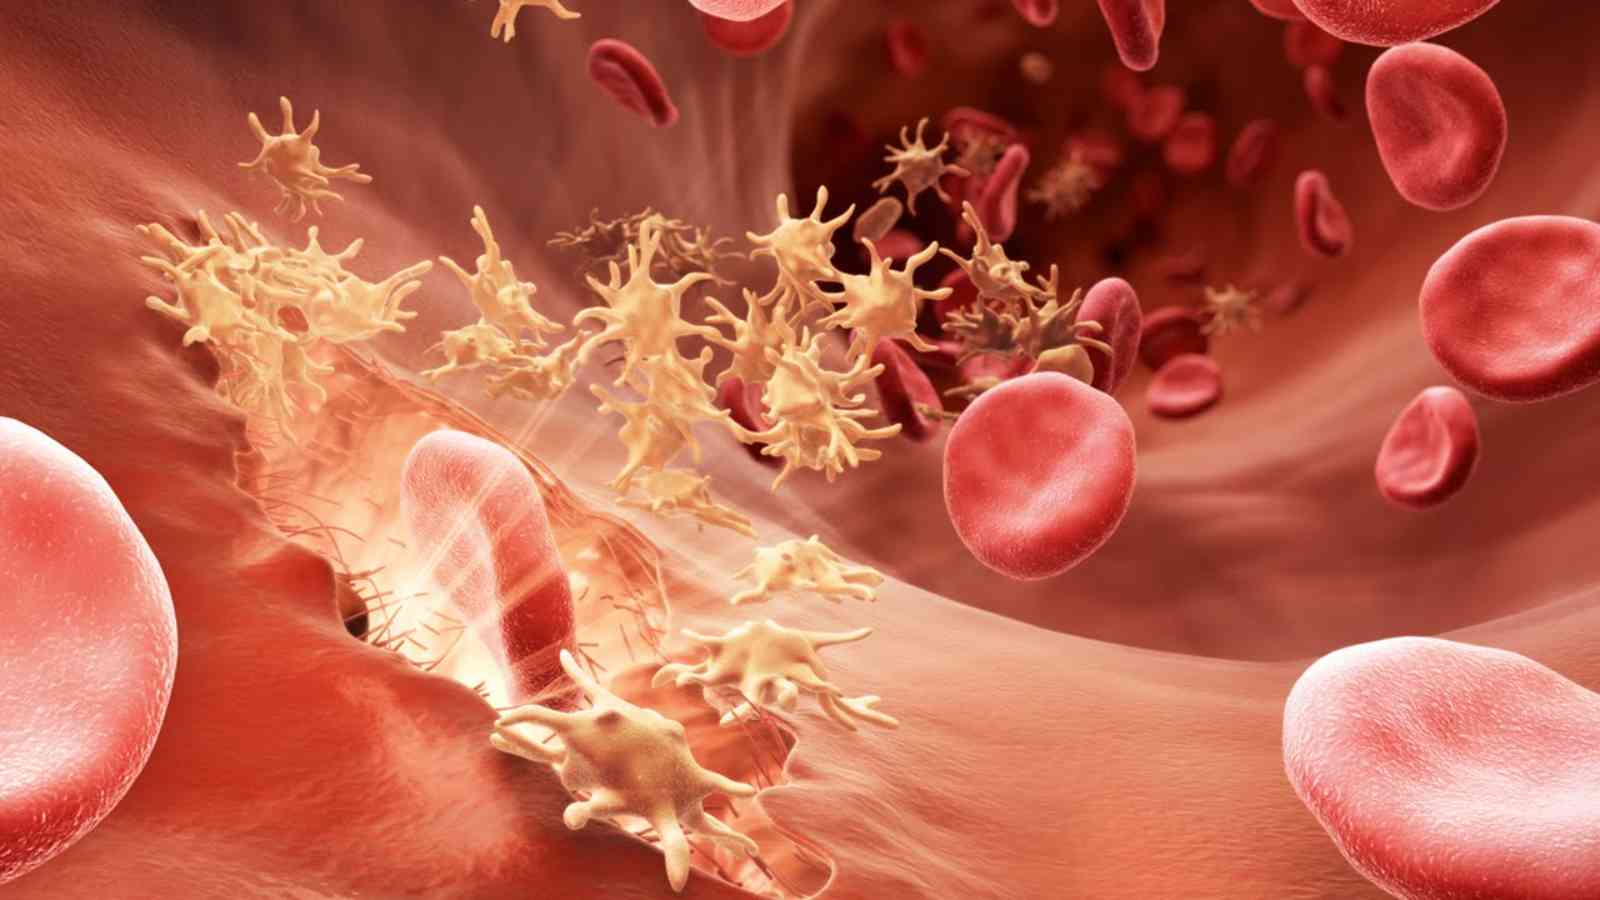 Understanding Hemophilia: Causes, risk and treatment